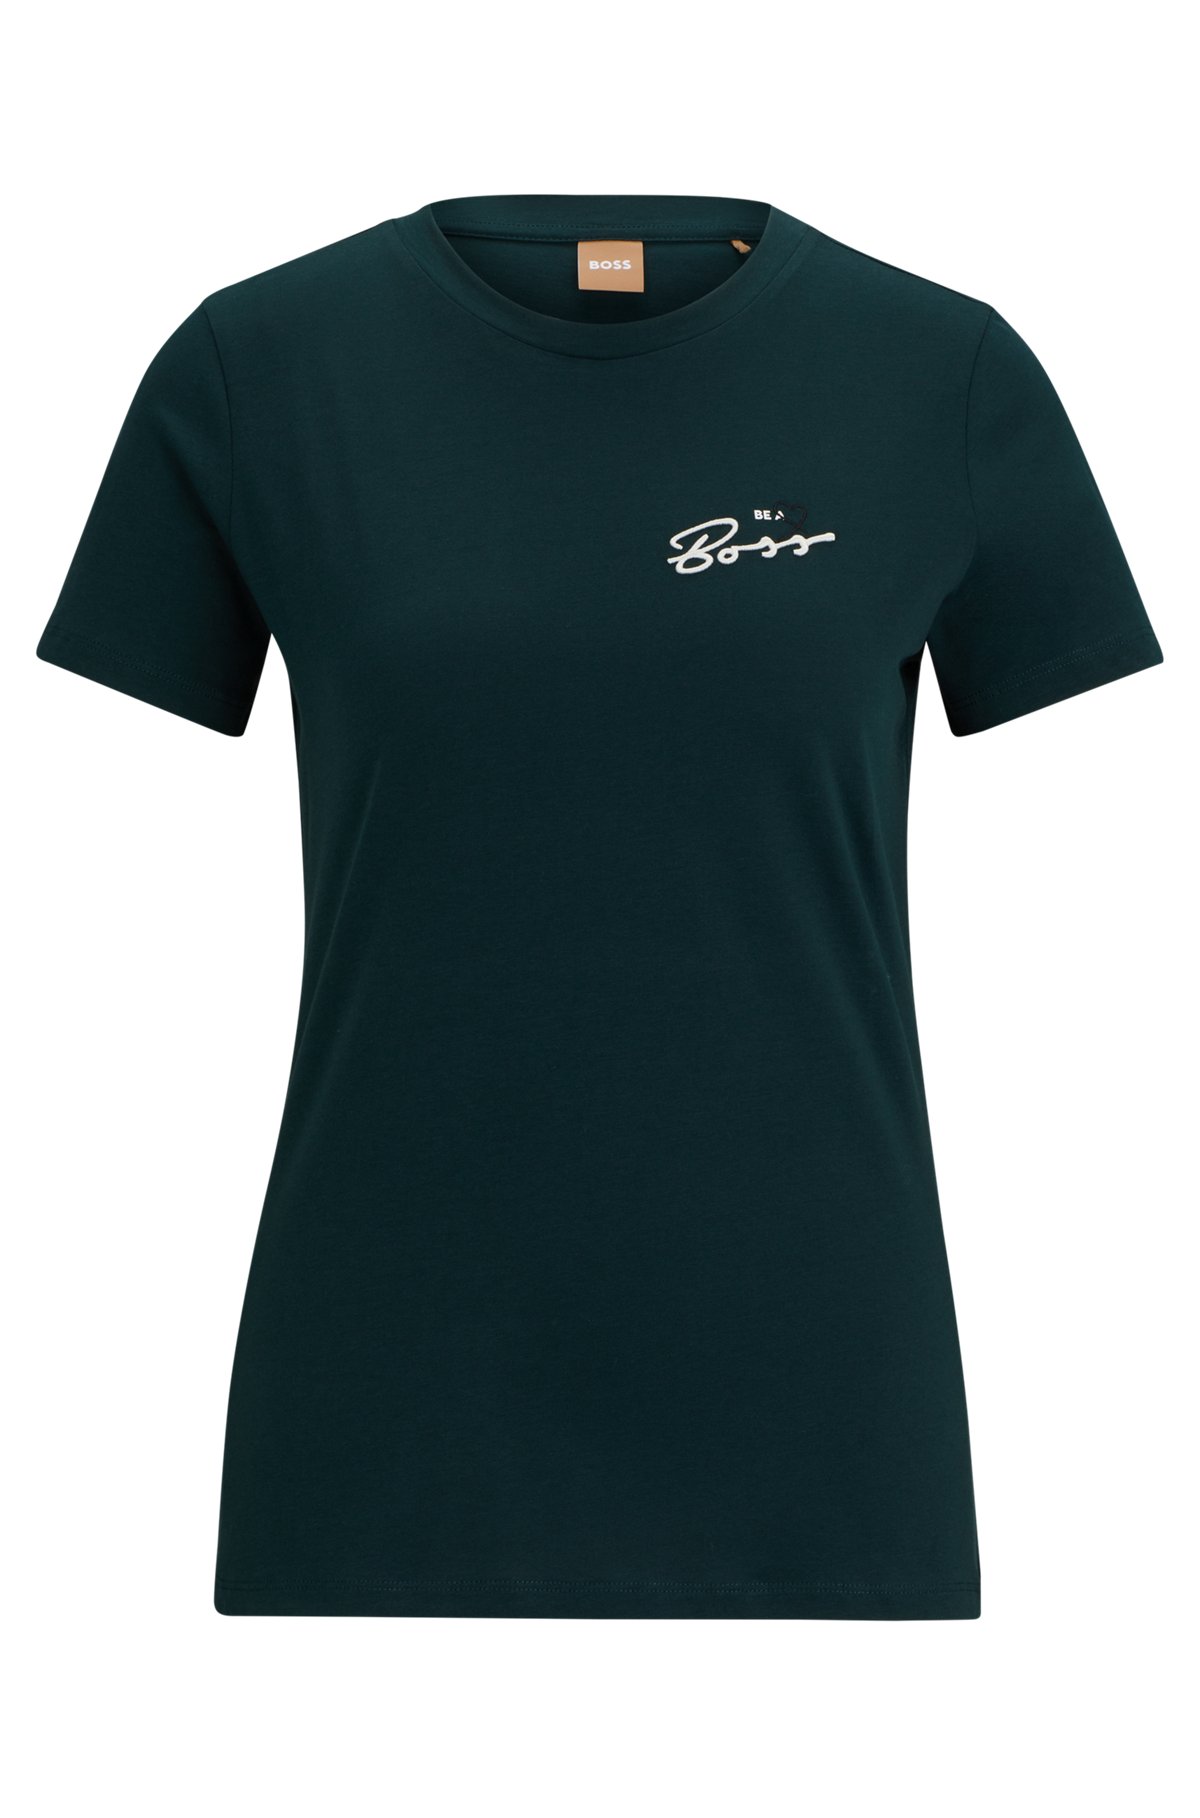 Organic-cotton T-shirt with logo and slogan, Dark Green